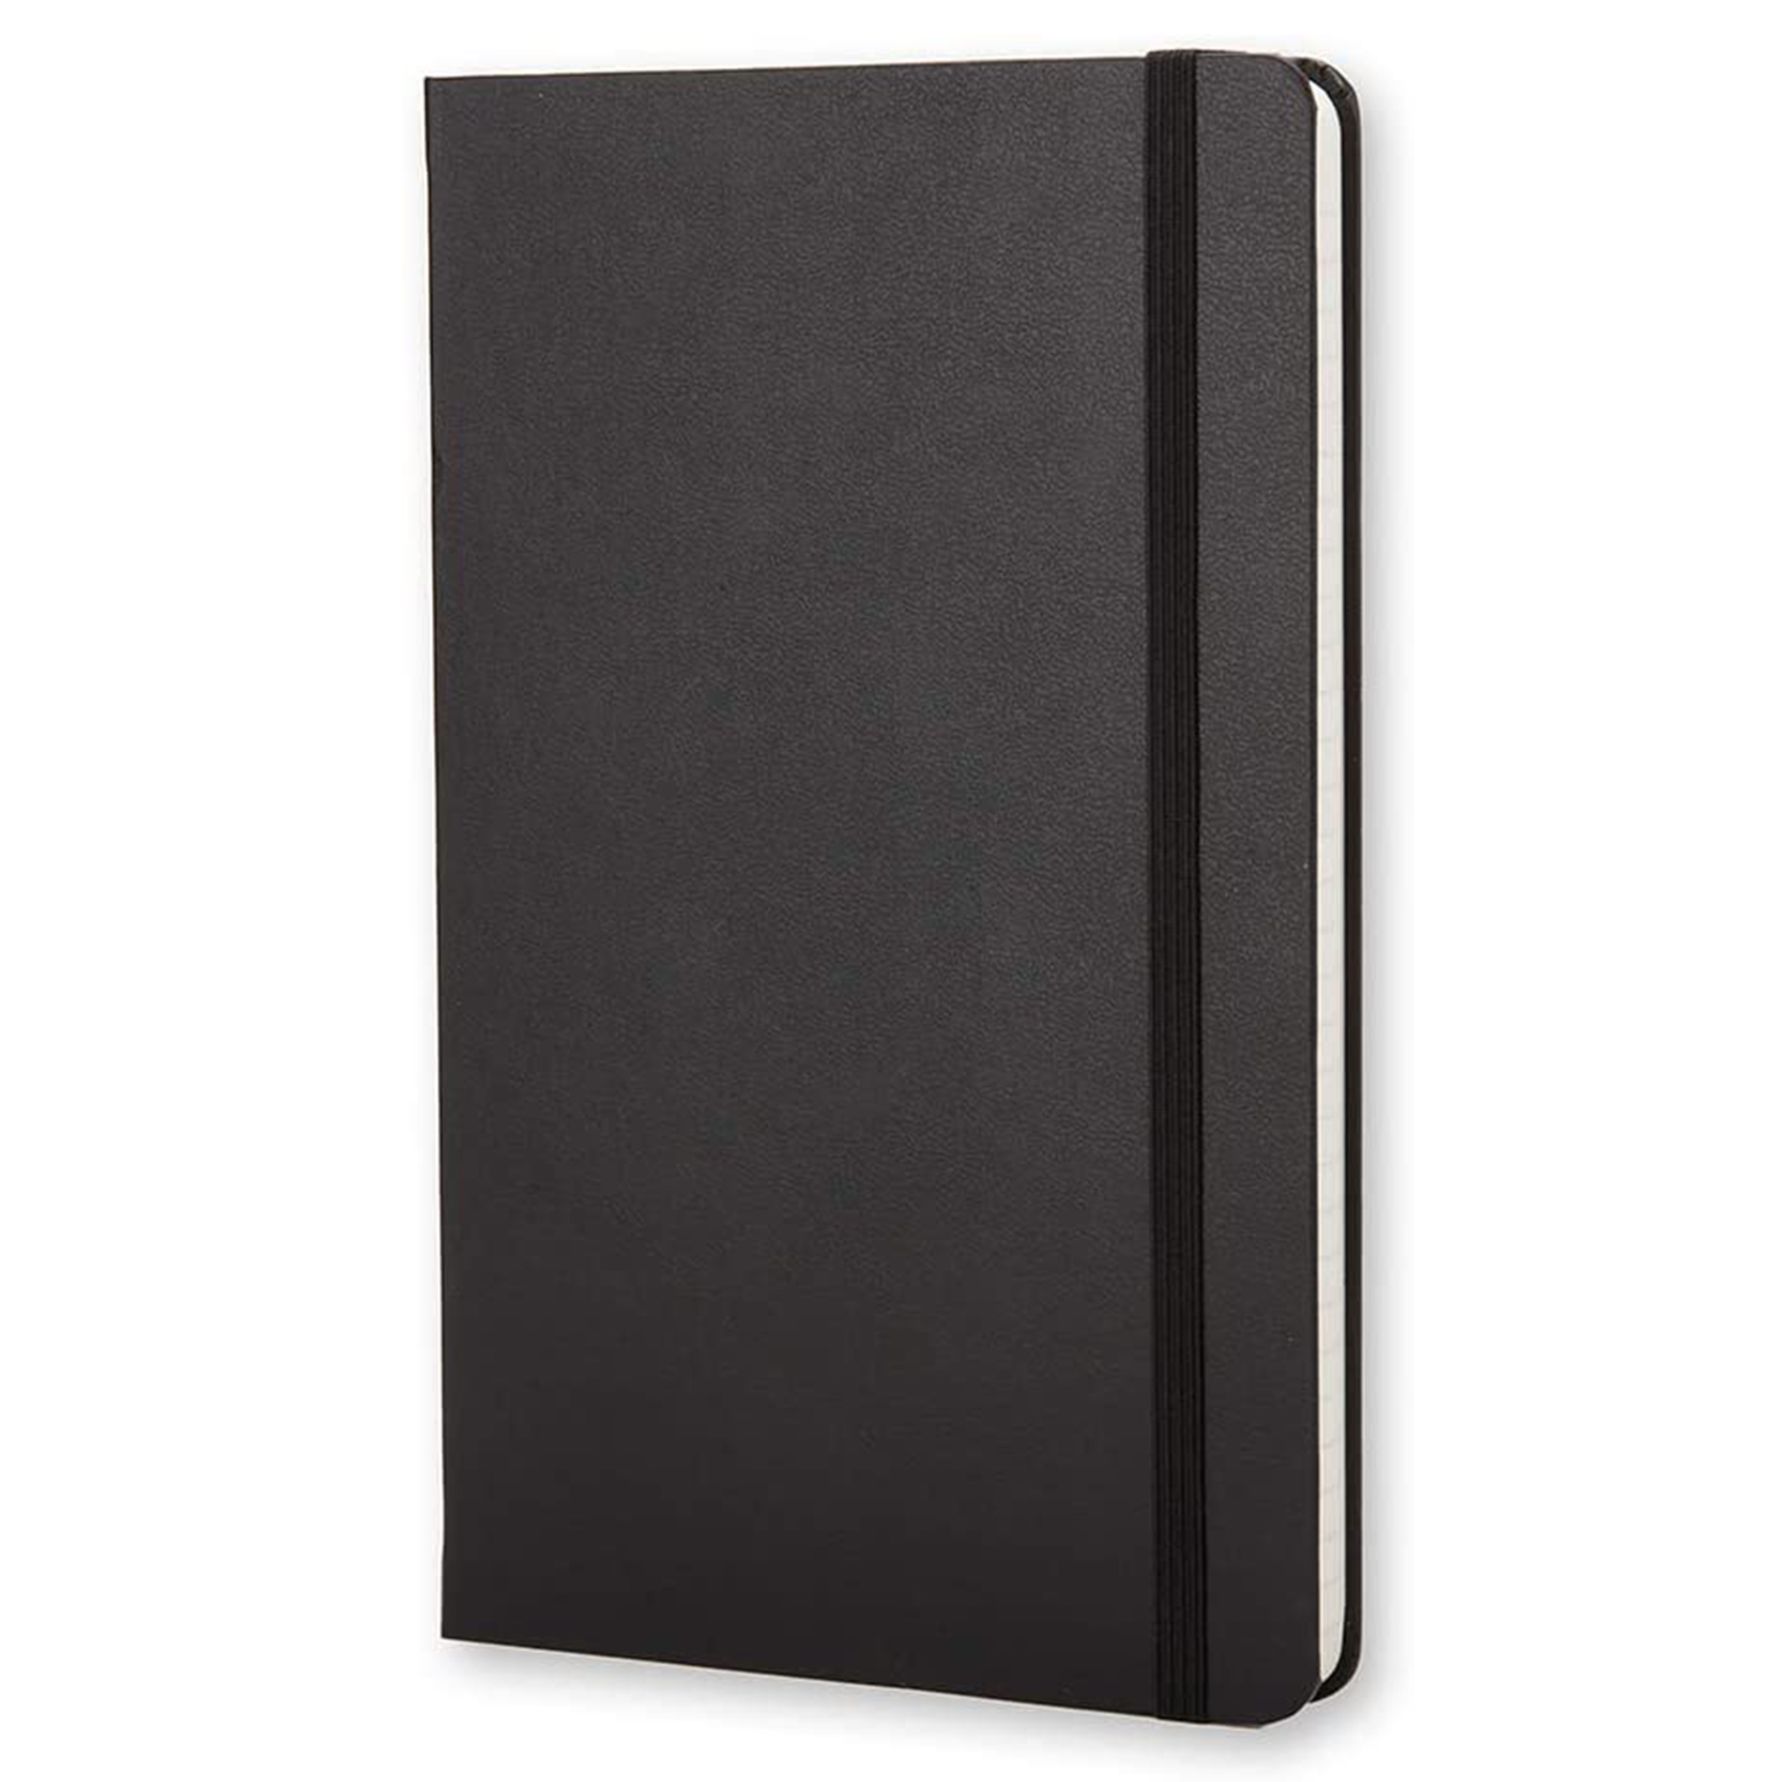 Moleskine Classic Notebook, Extra Large, Plain, Black, Soft Cover (7.5 x 10)